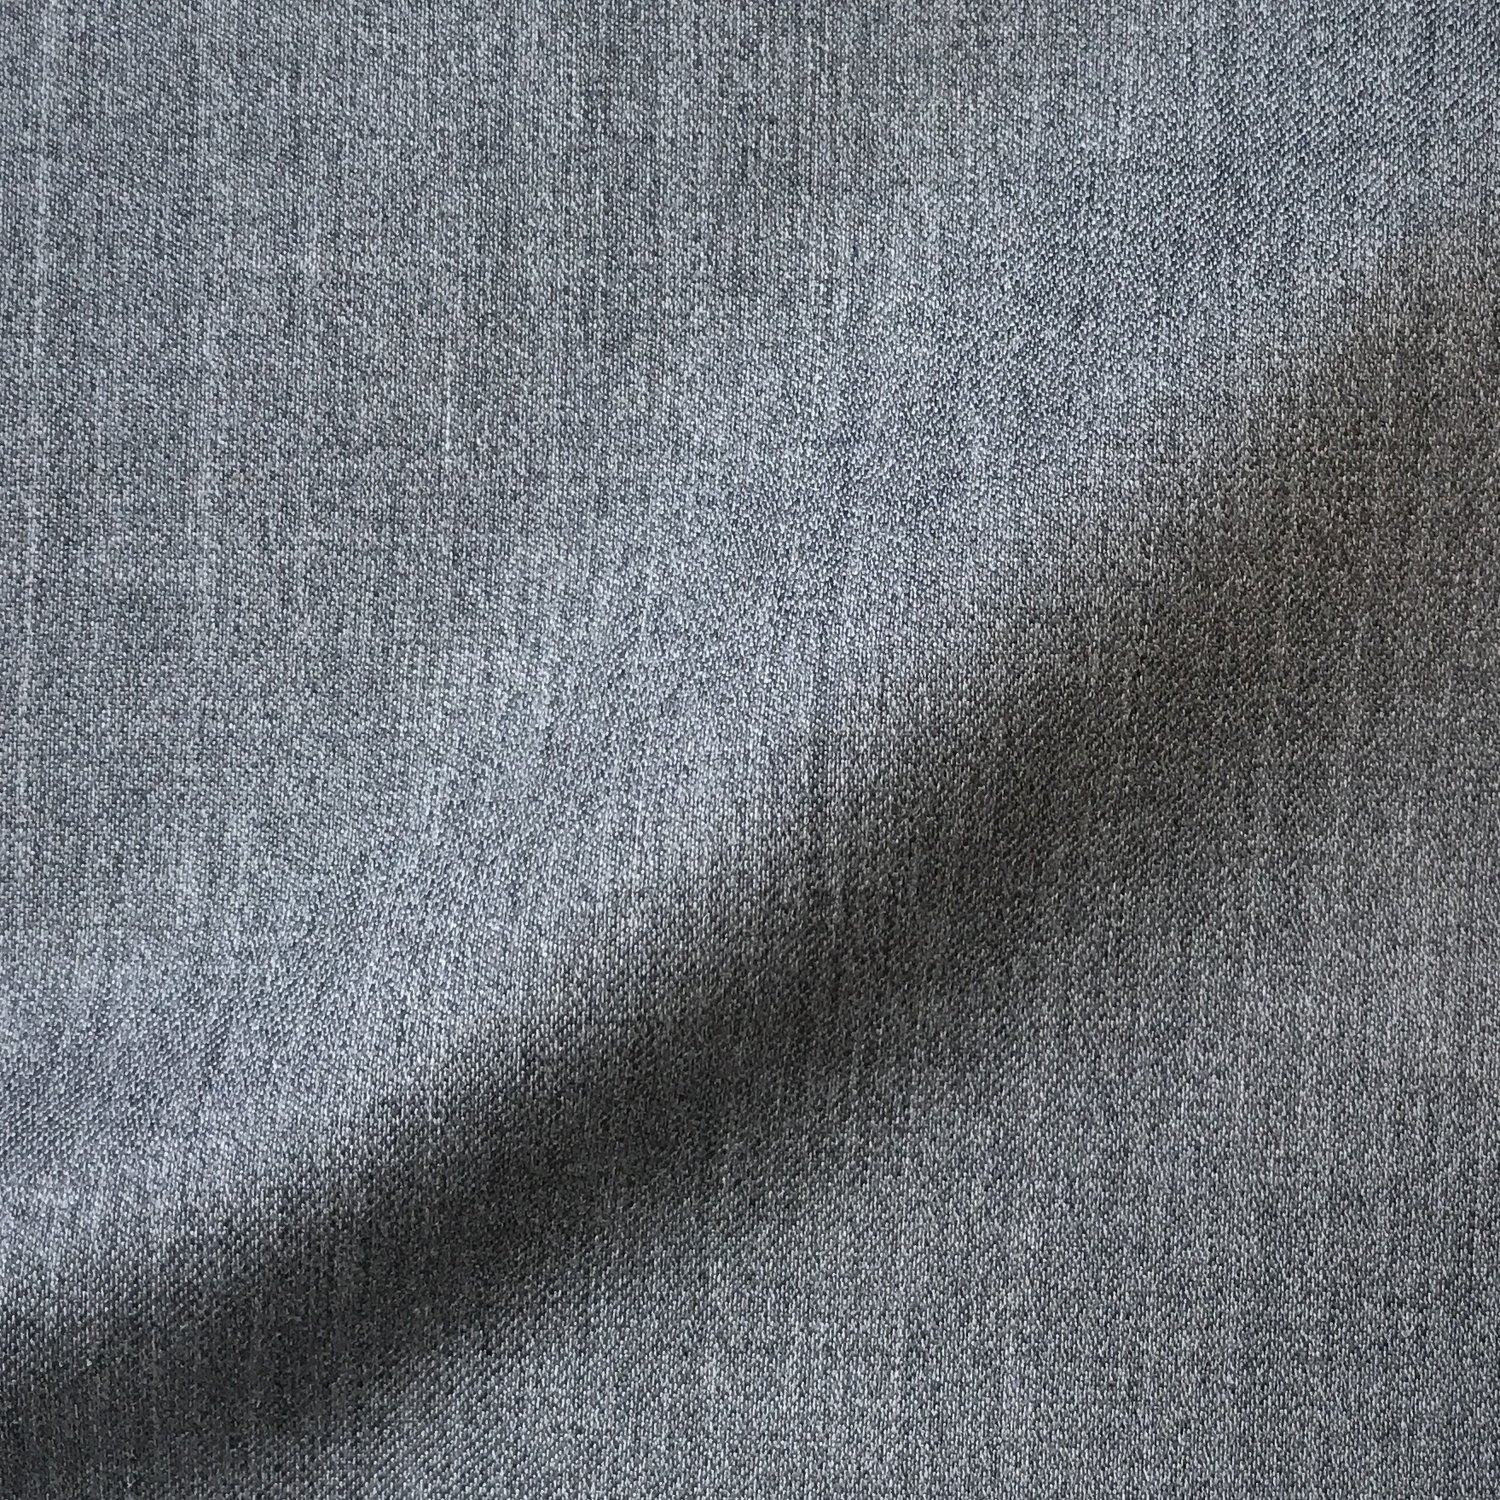 Vitale Barberis Canonico Wool Starter – Top & Notch Custom